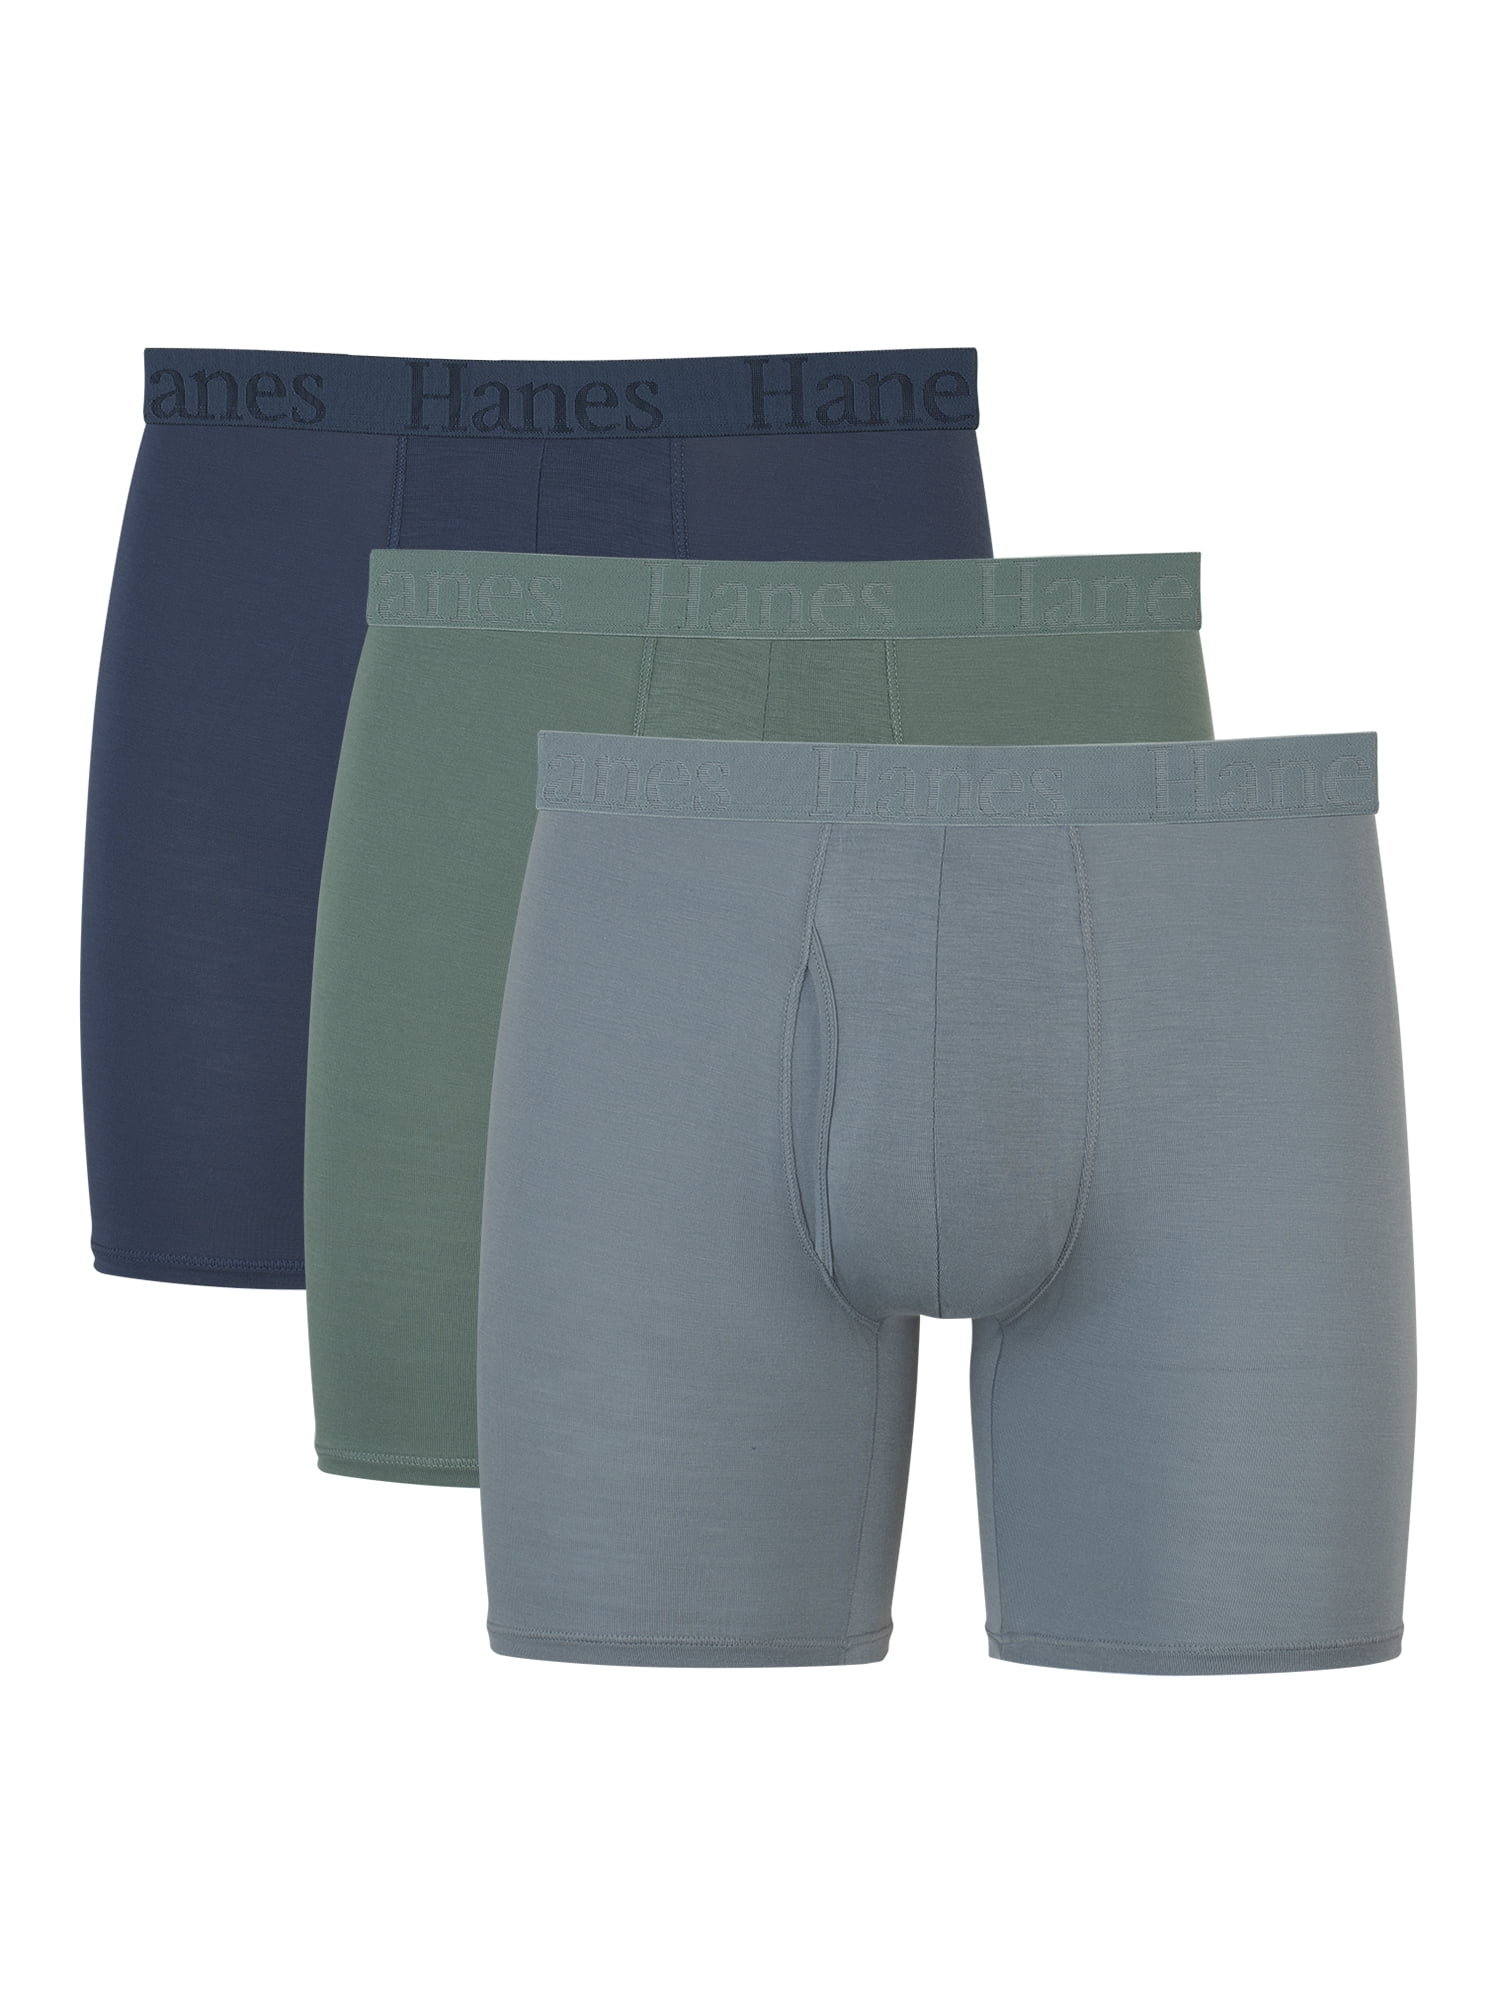 Hanes Sport Men's Air Mesh Long Leg Boxer Brief Underwear, X-Temp, 4-Pack  Assorted XL 